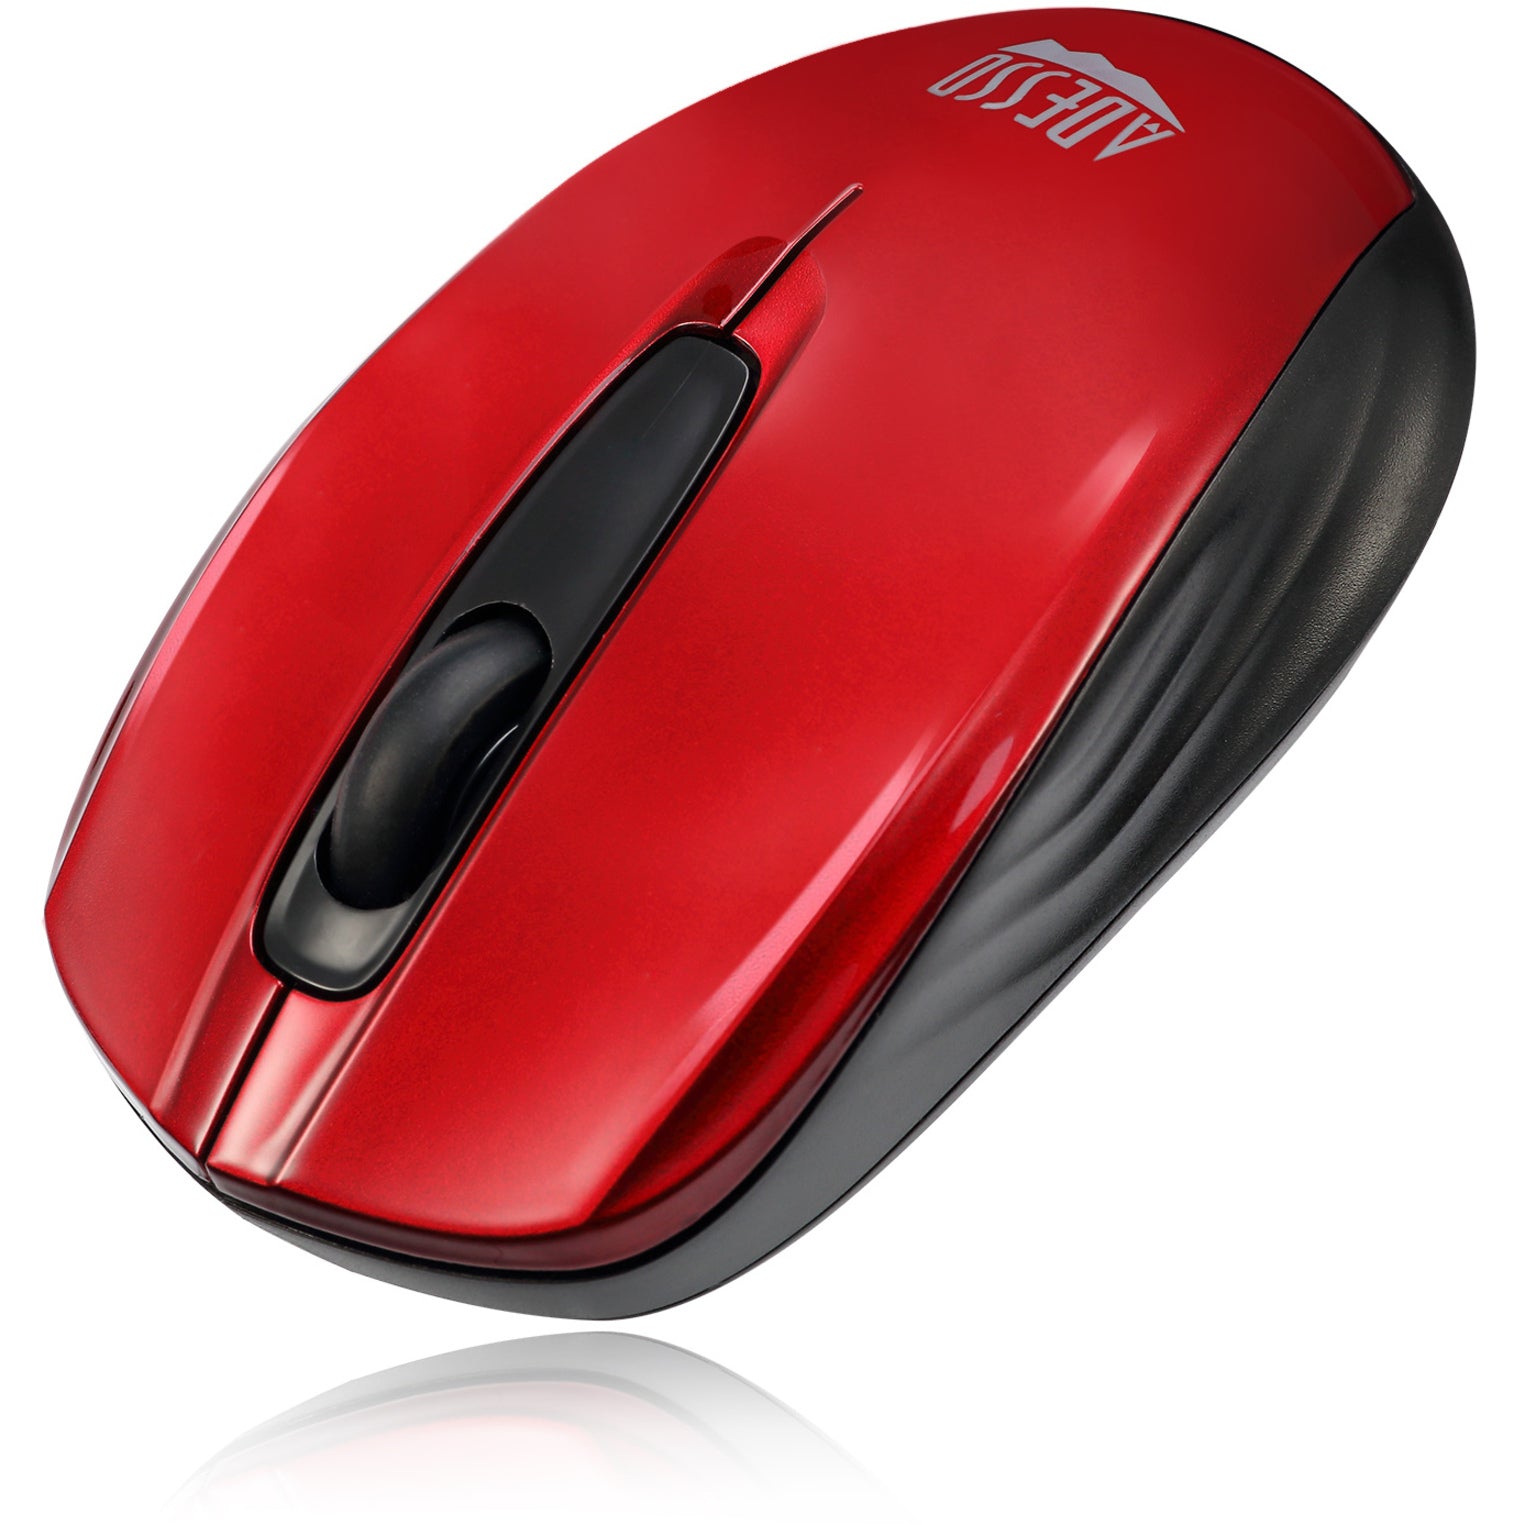 Adesso iMouse S50R 2.4GHz Wireless Mini Mouse, Ergonomic Fit, Scroll Wheel, 1200 dpi